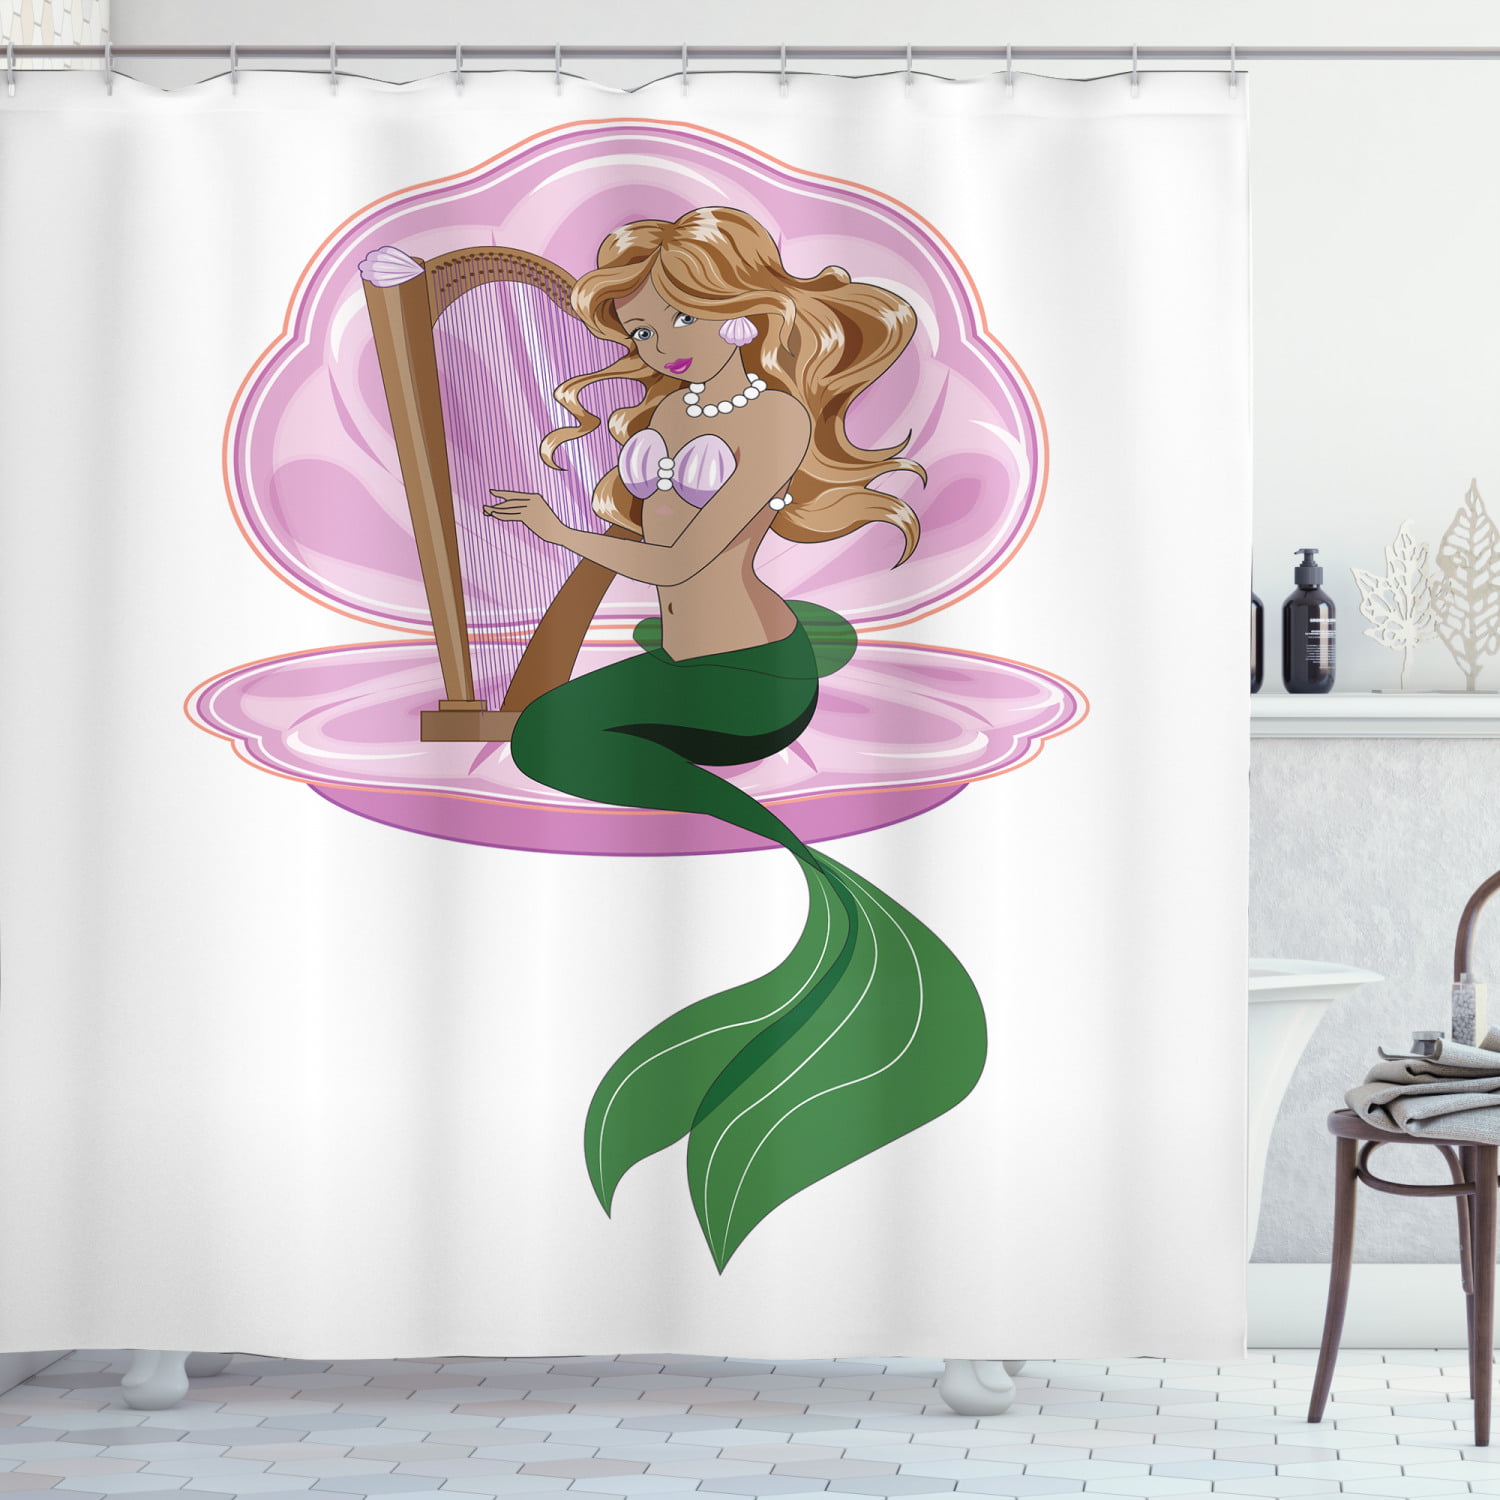 Mermaid With Blue Hair Home Bathroom Shower Curtain Fabric & 12 Hook 71 Inch 